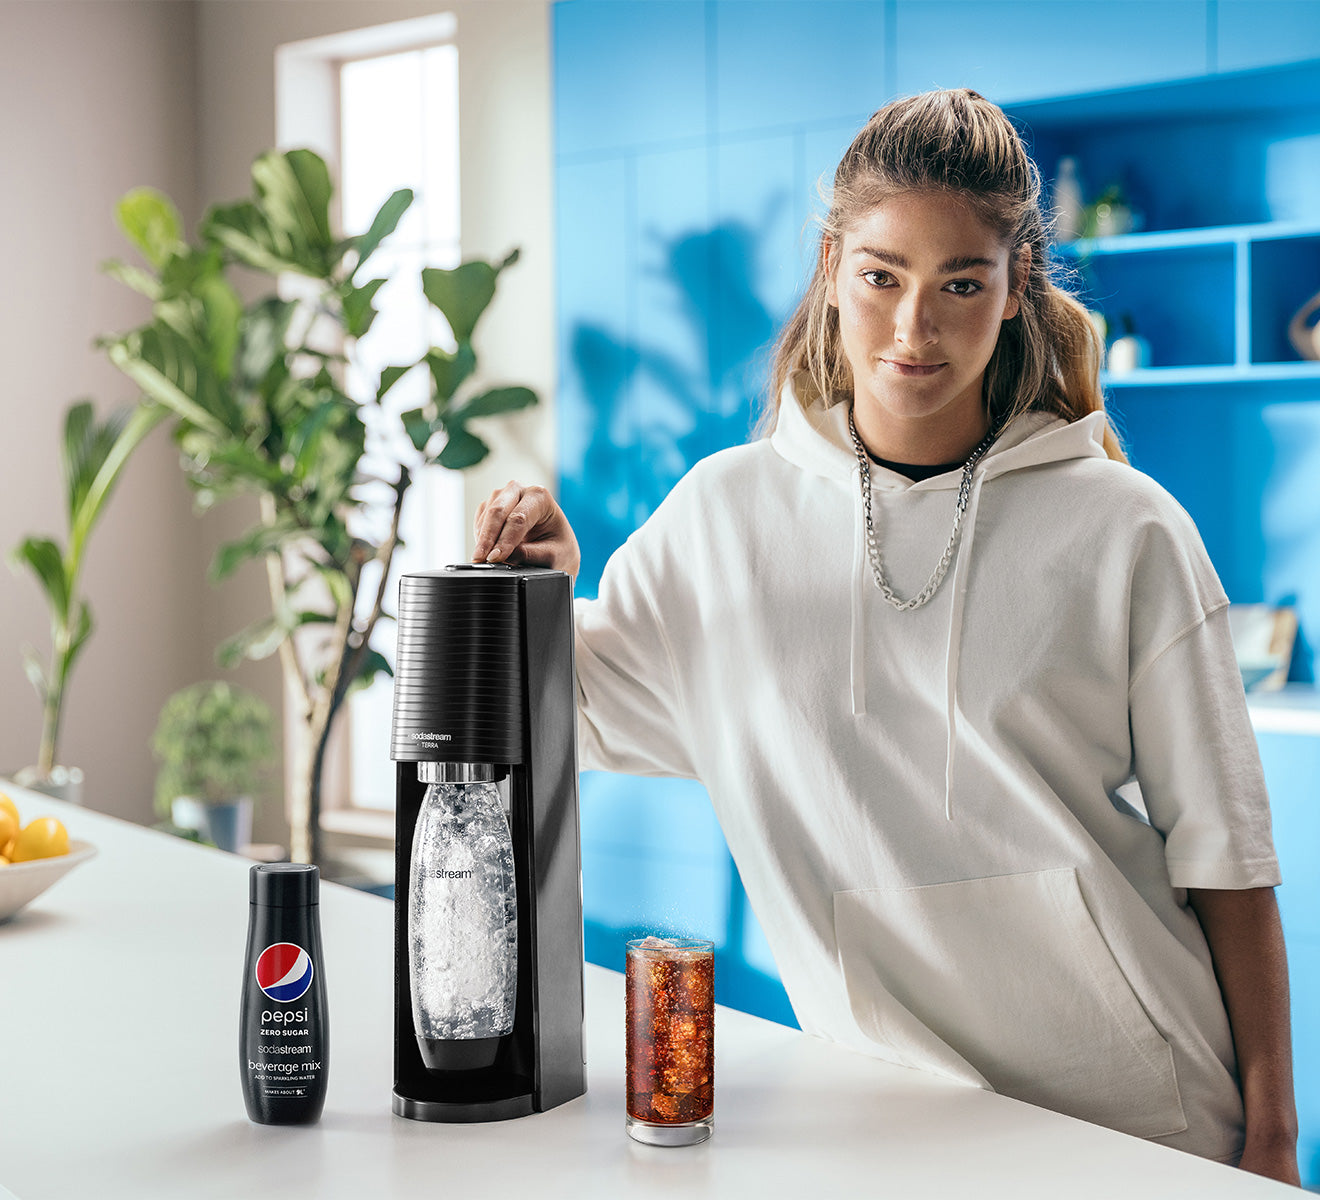 Sirop et concentré Sodastream Pepsi Zéro Sucres sur